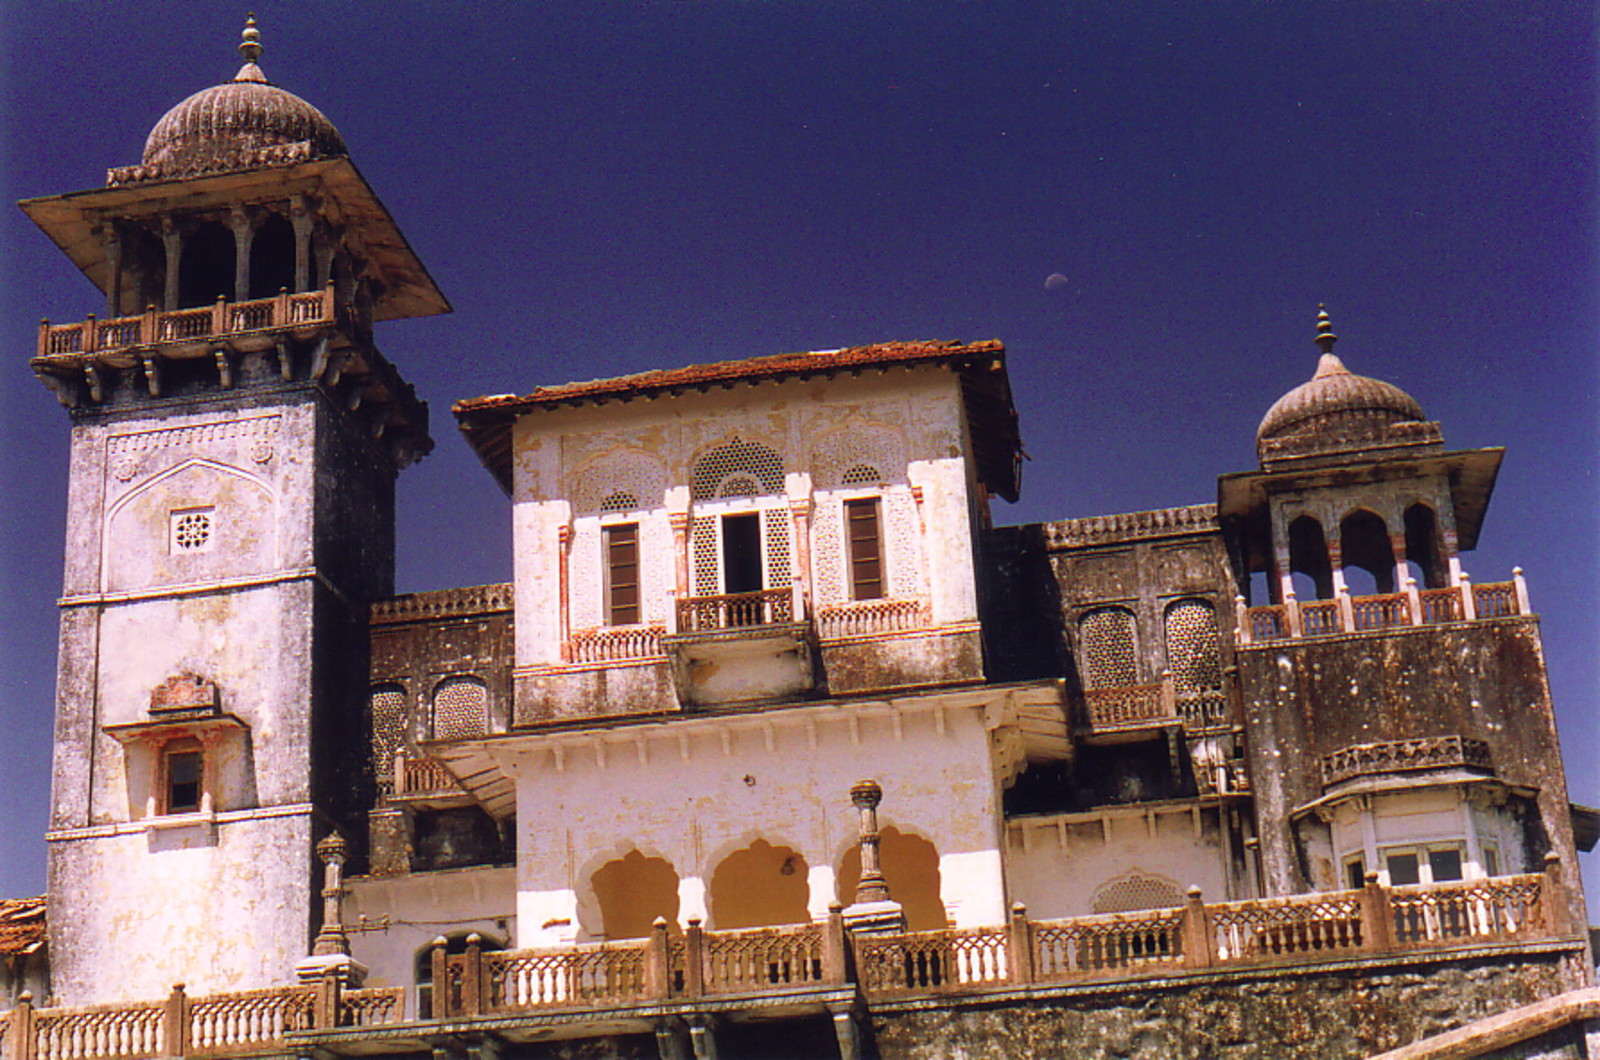 The Maharaja of Jaipur's old summer palace